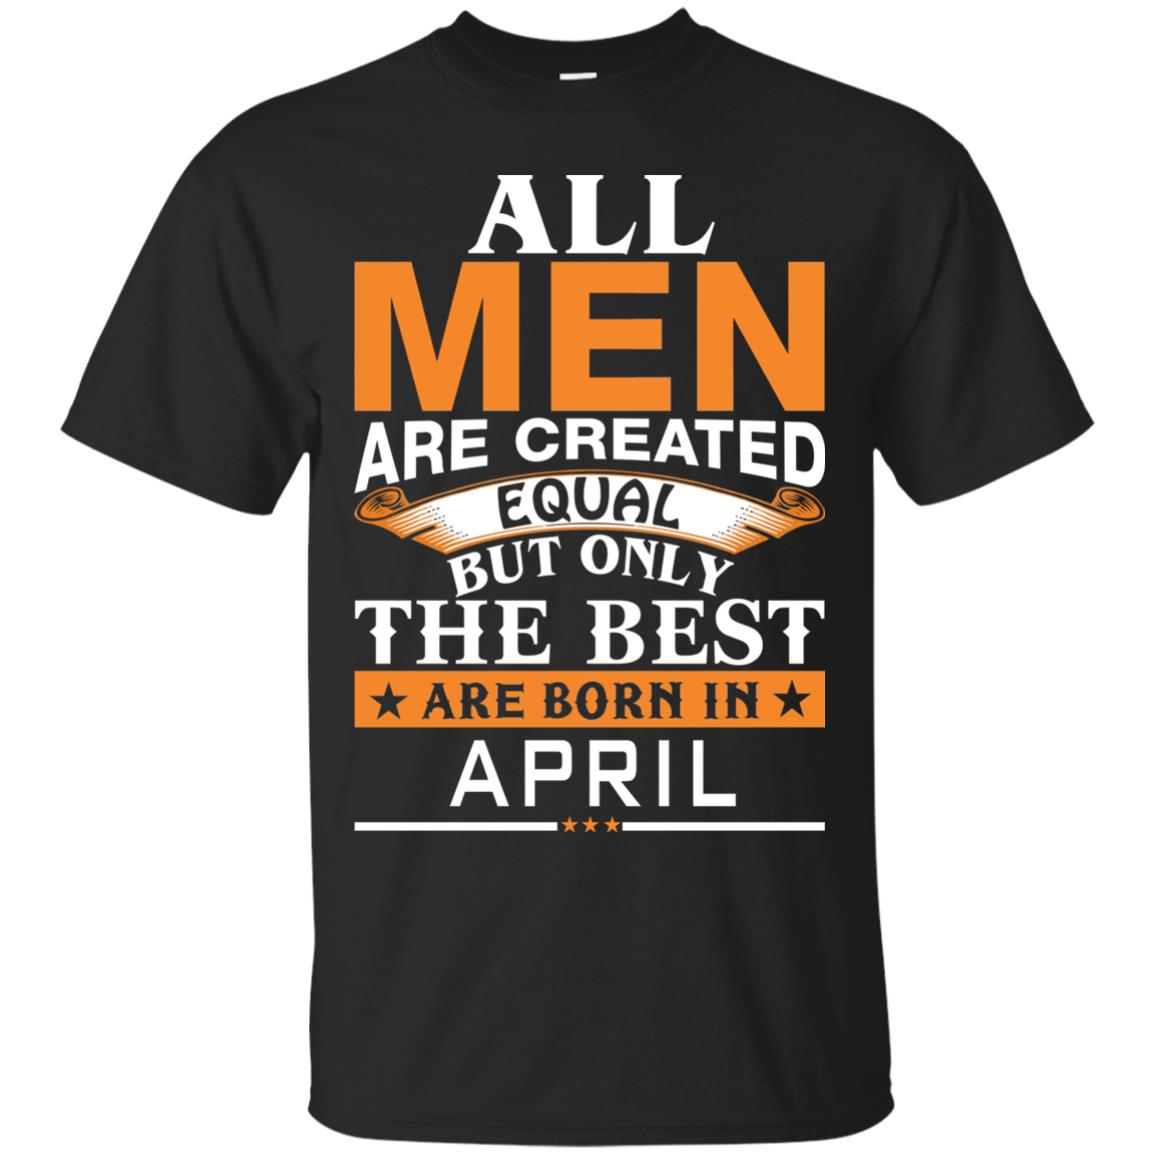 Vin Diesel: All Men Created Equal But Best Born In April shirt